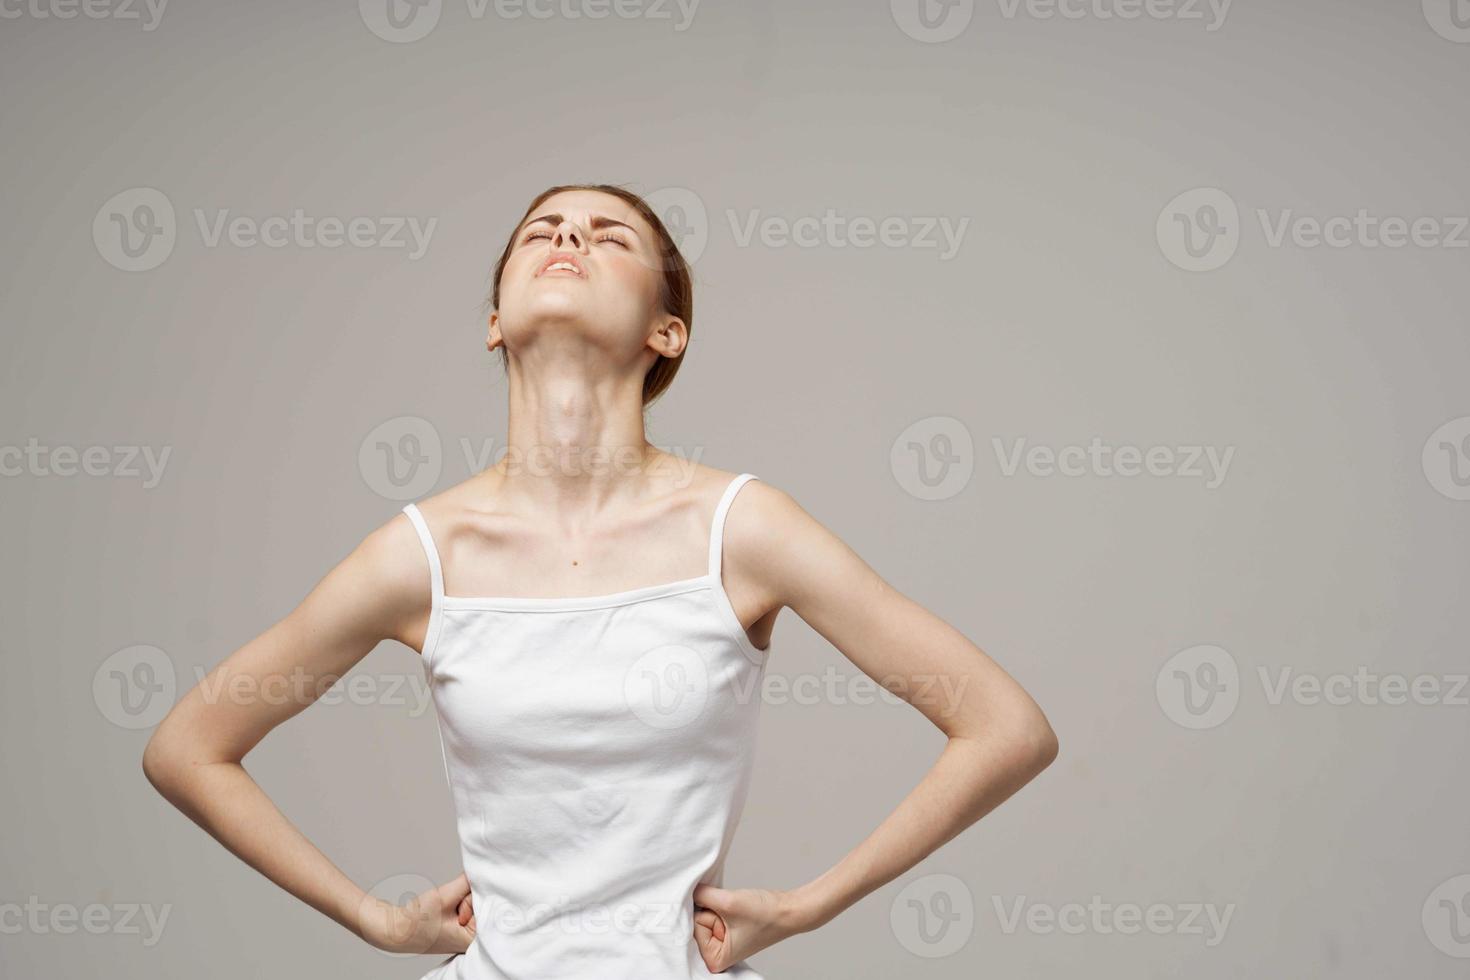 woman groin pain intimate illness gynecology discomfort light background photo